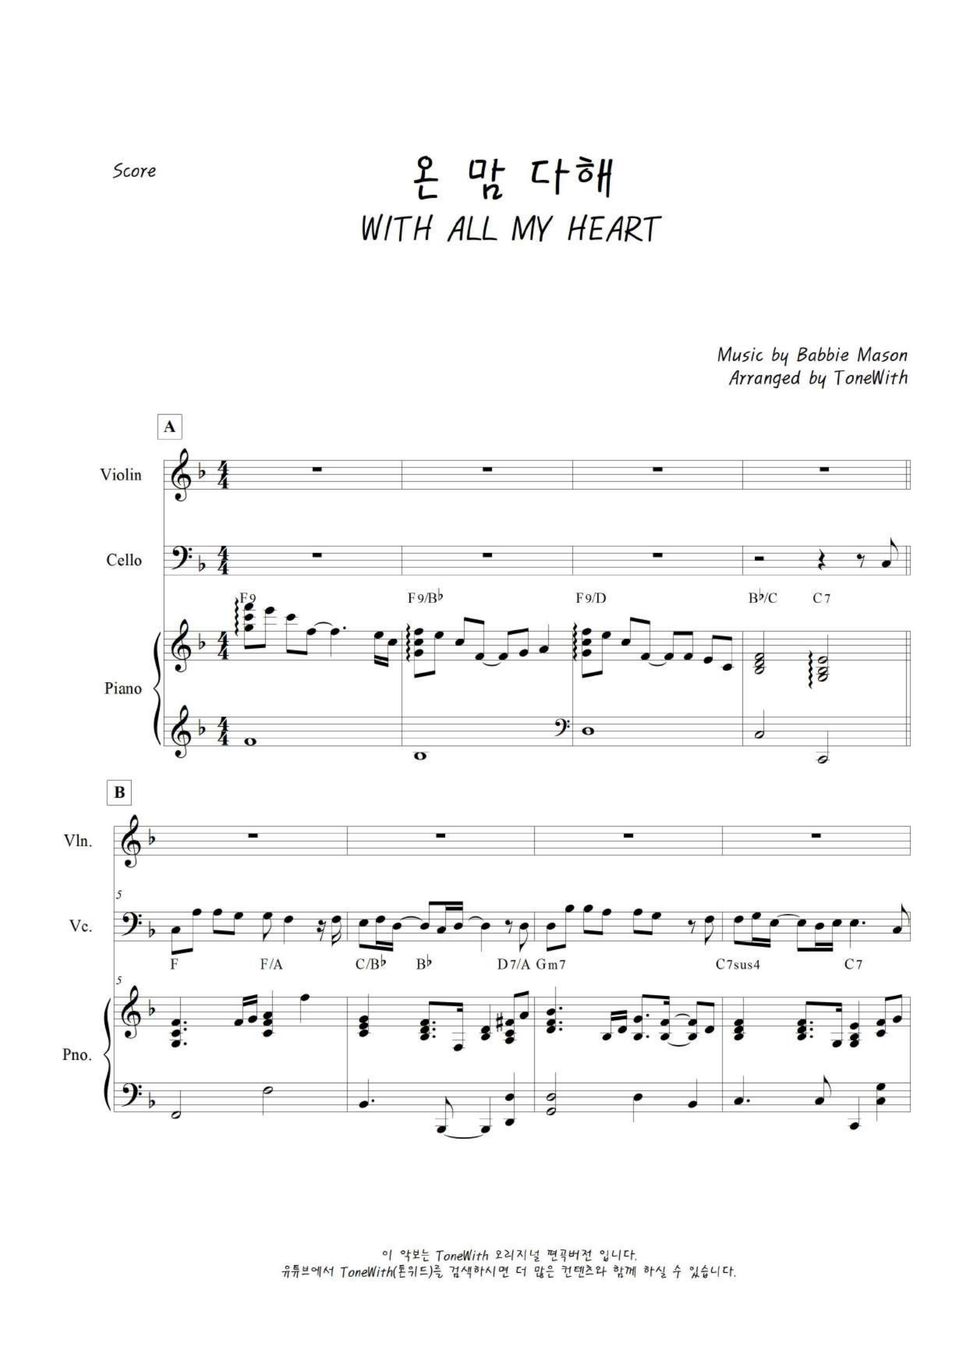 Babbie Mason - 온 맘 다해  WITH ALL MY HEART (삼중주 / 피아노,바이올린,첼로) by ToneWith 톤위드